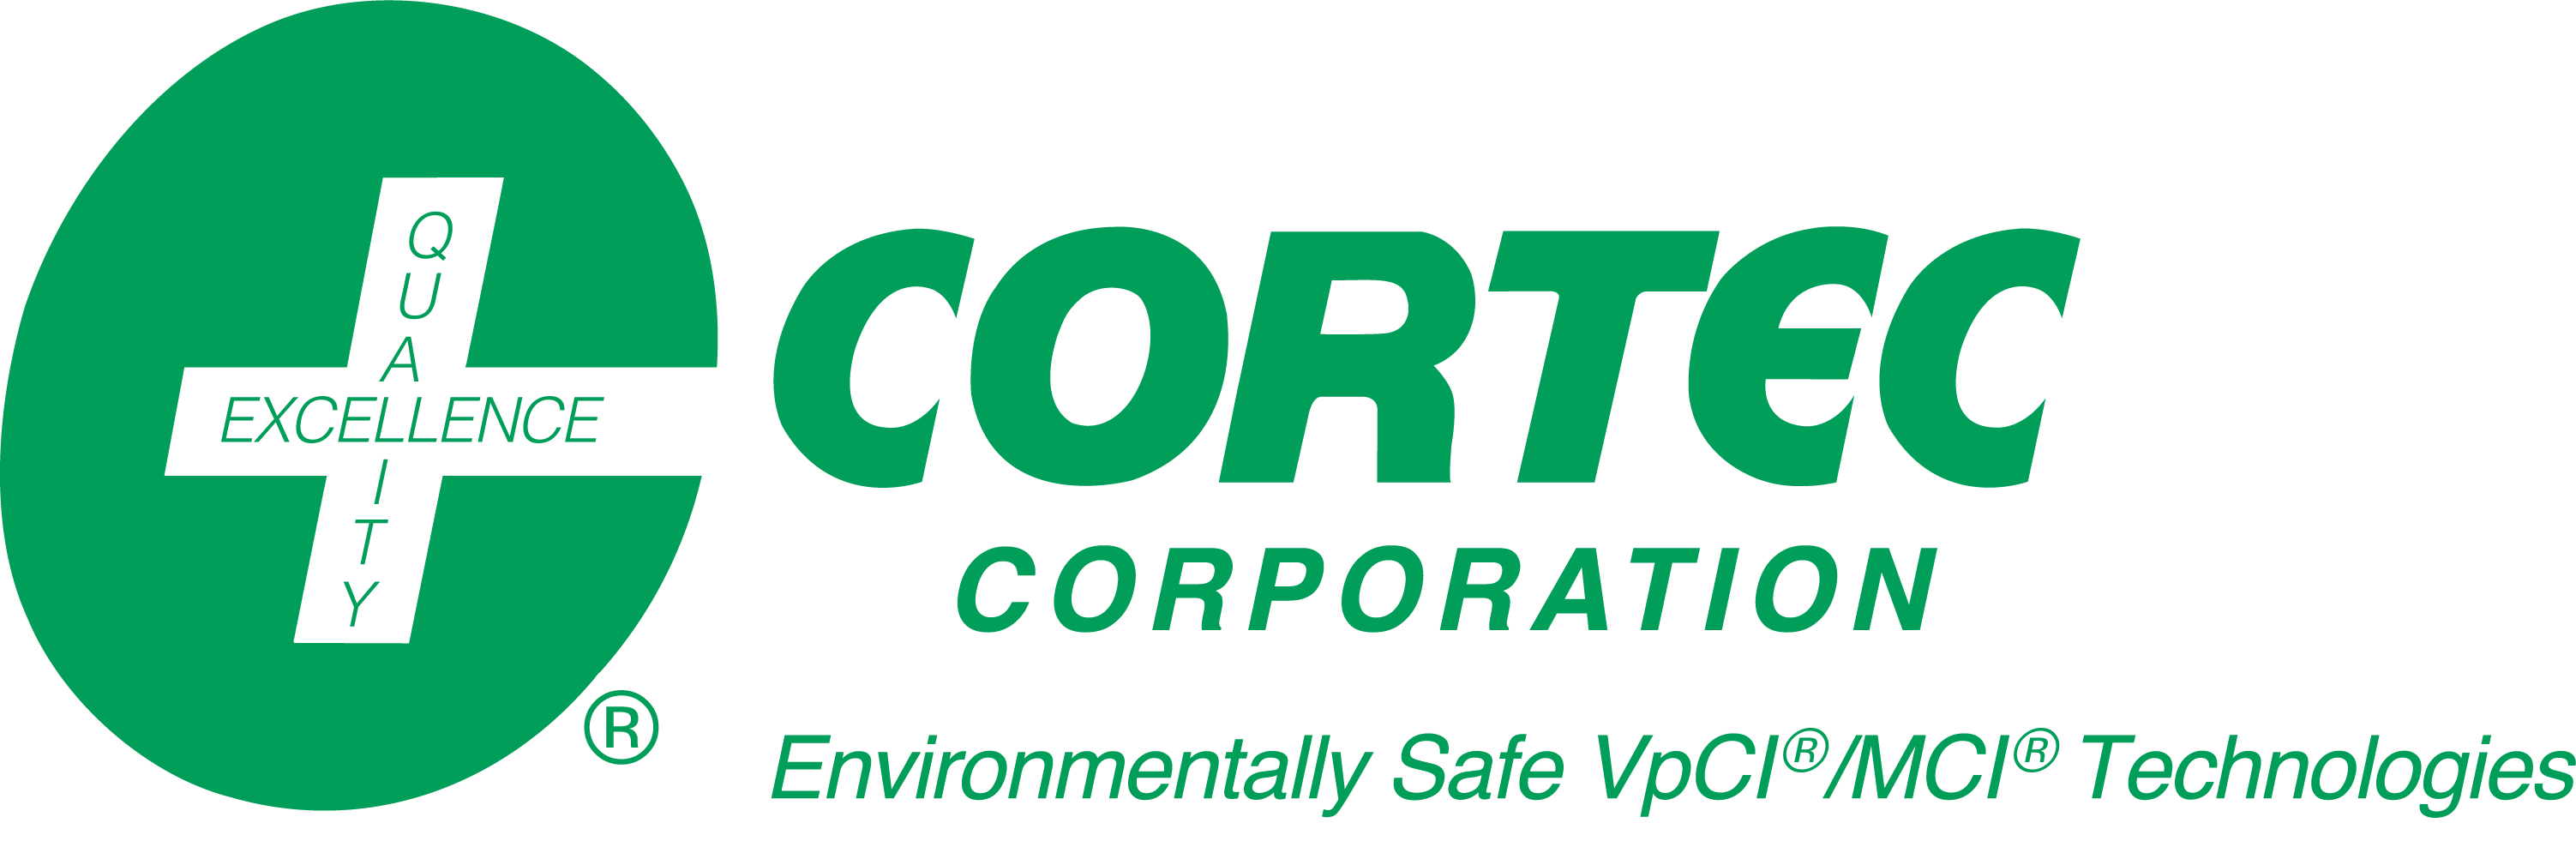 cortec logo in green